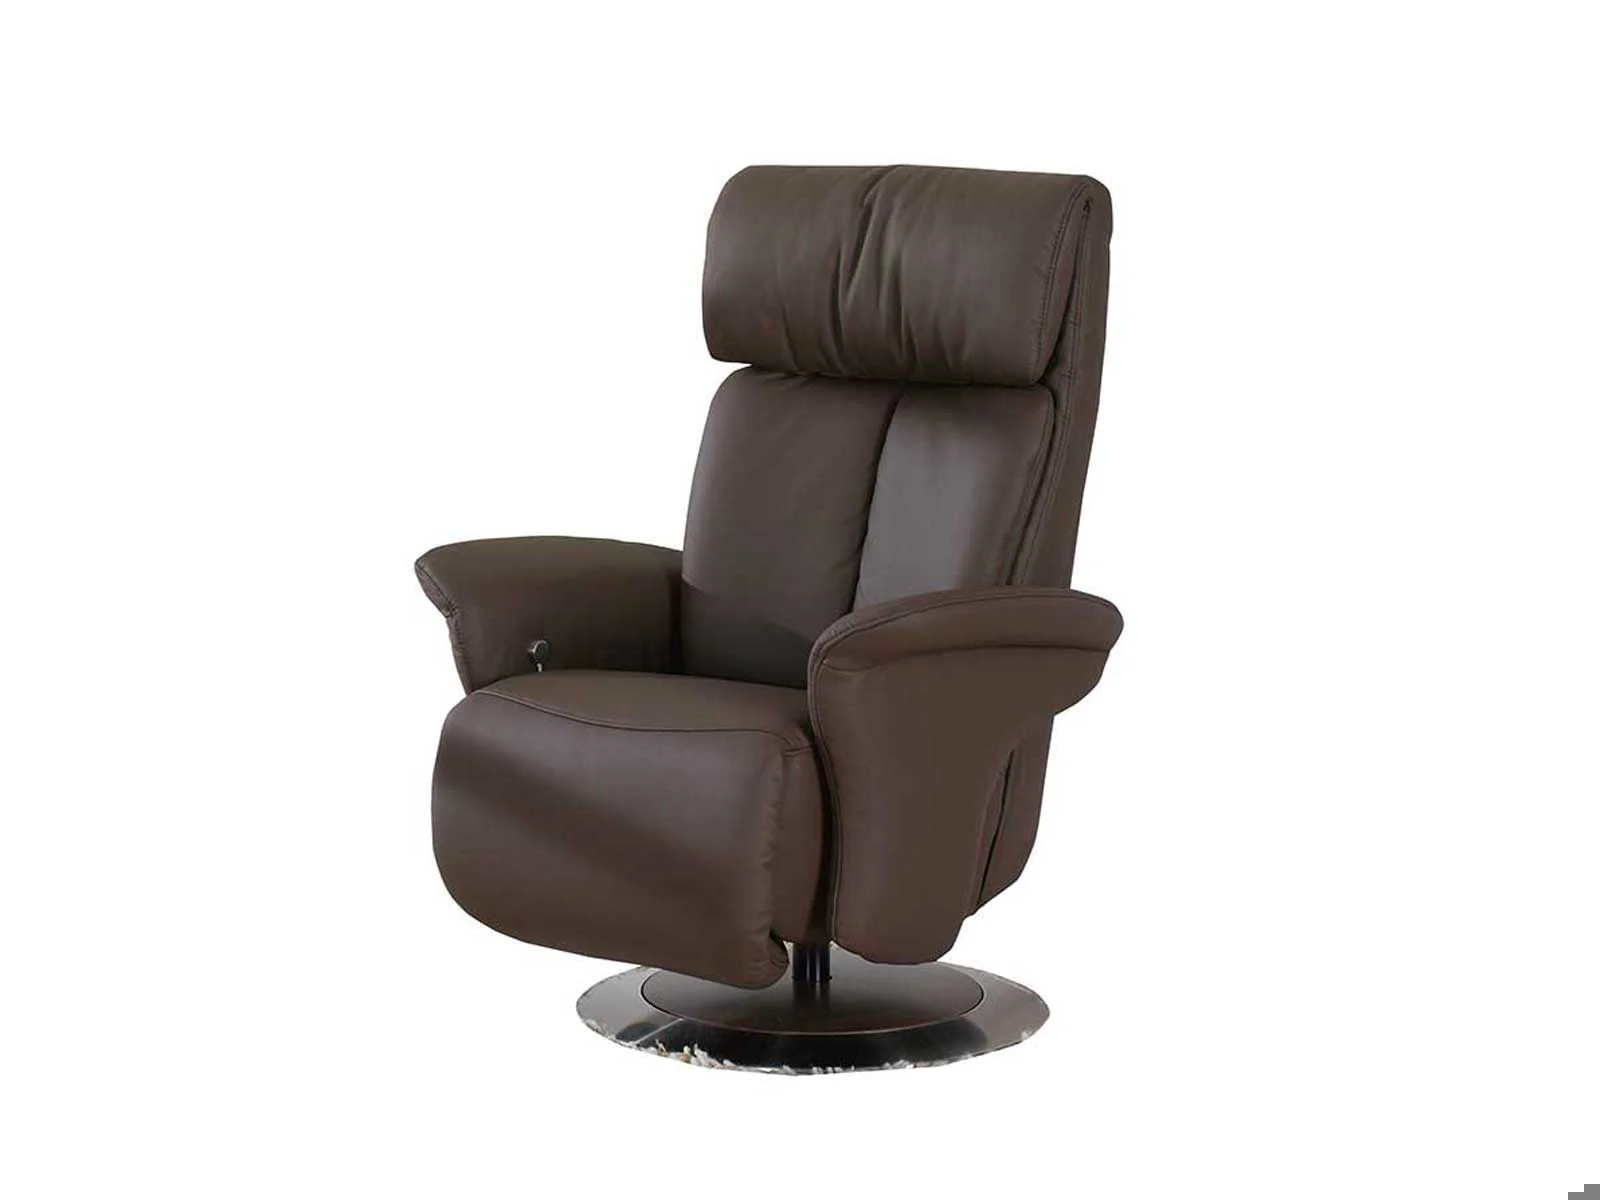 Medium Manual Relaxer Chair